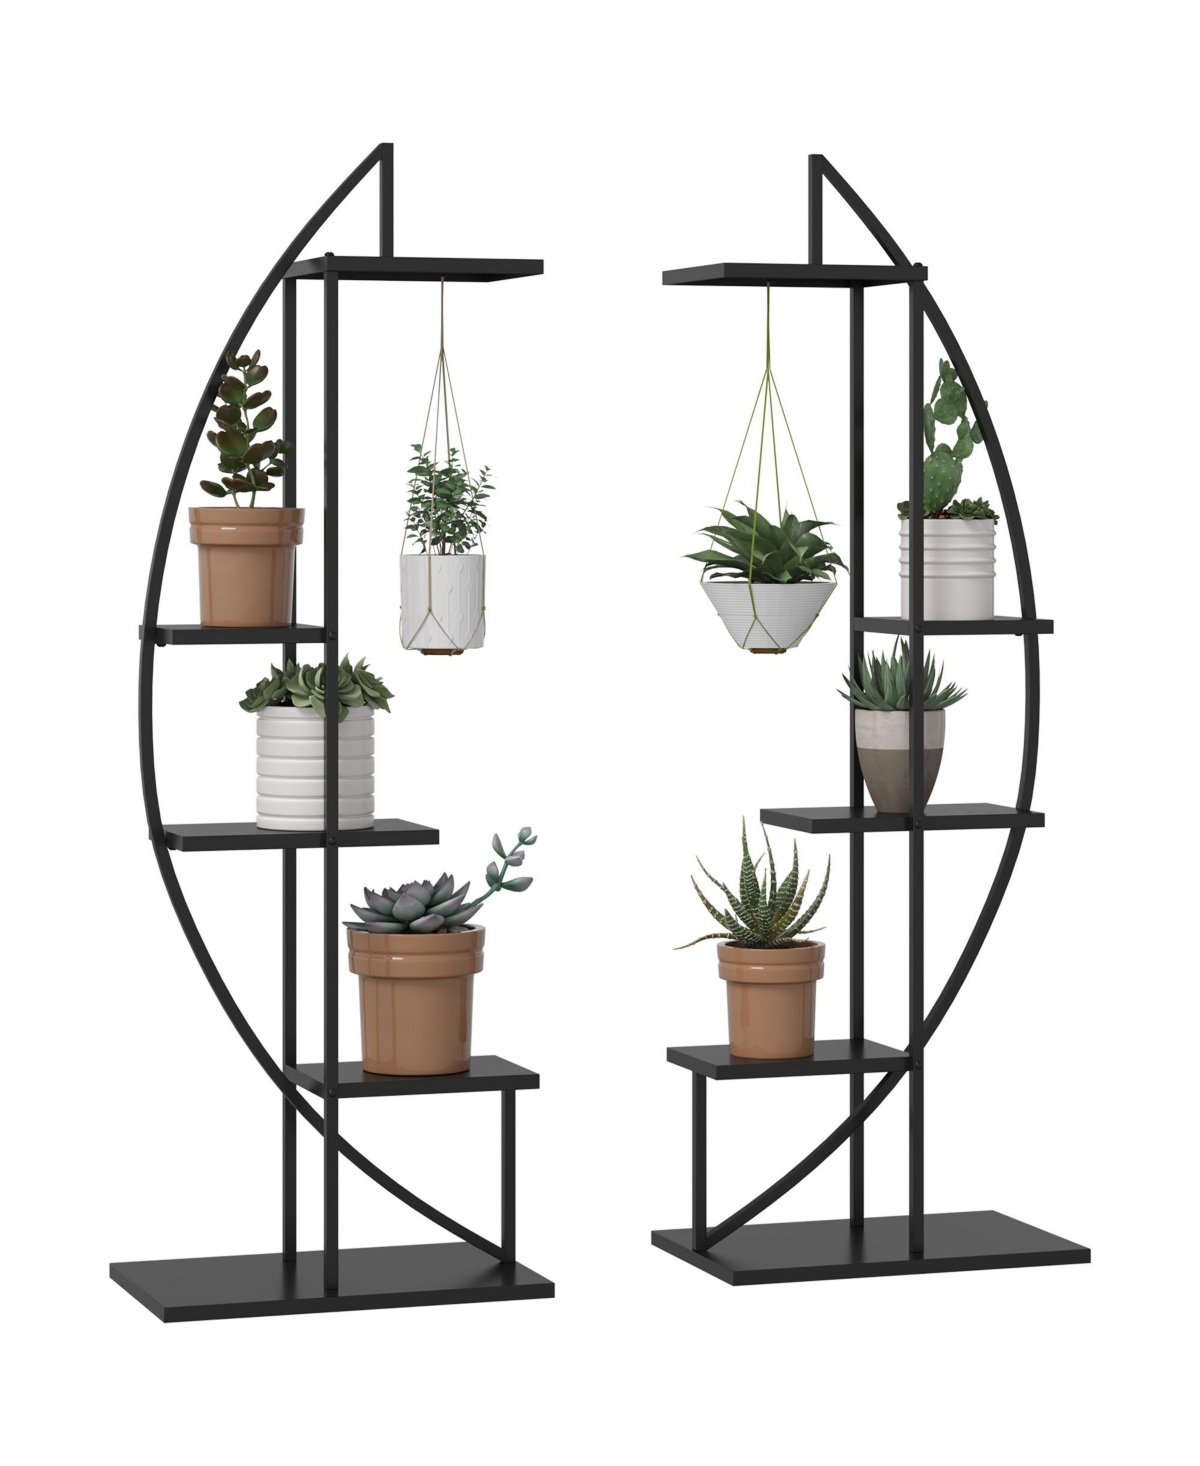 5 Tier Metal Plant Stand Half Moon Shape Ladder Flower Pot Holder Shelf for Indoor Outdoor Patio Lawn Garden Balcony Decor, 2 Pack, Black - B